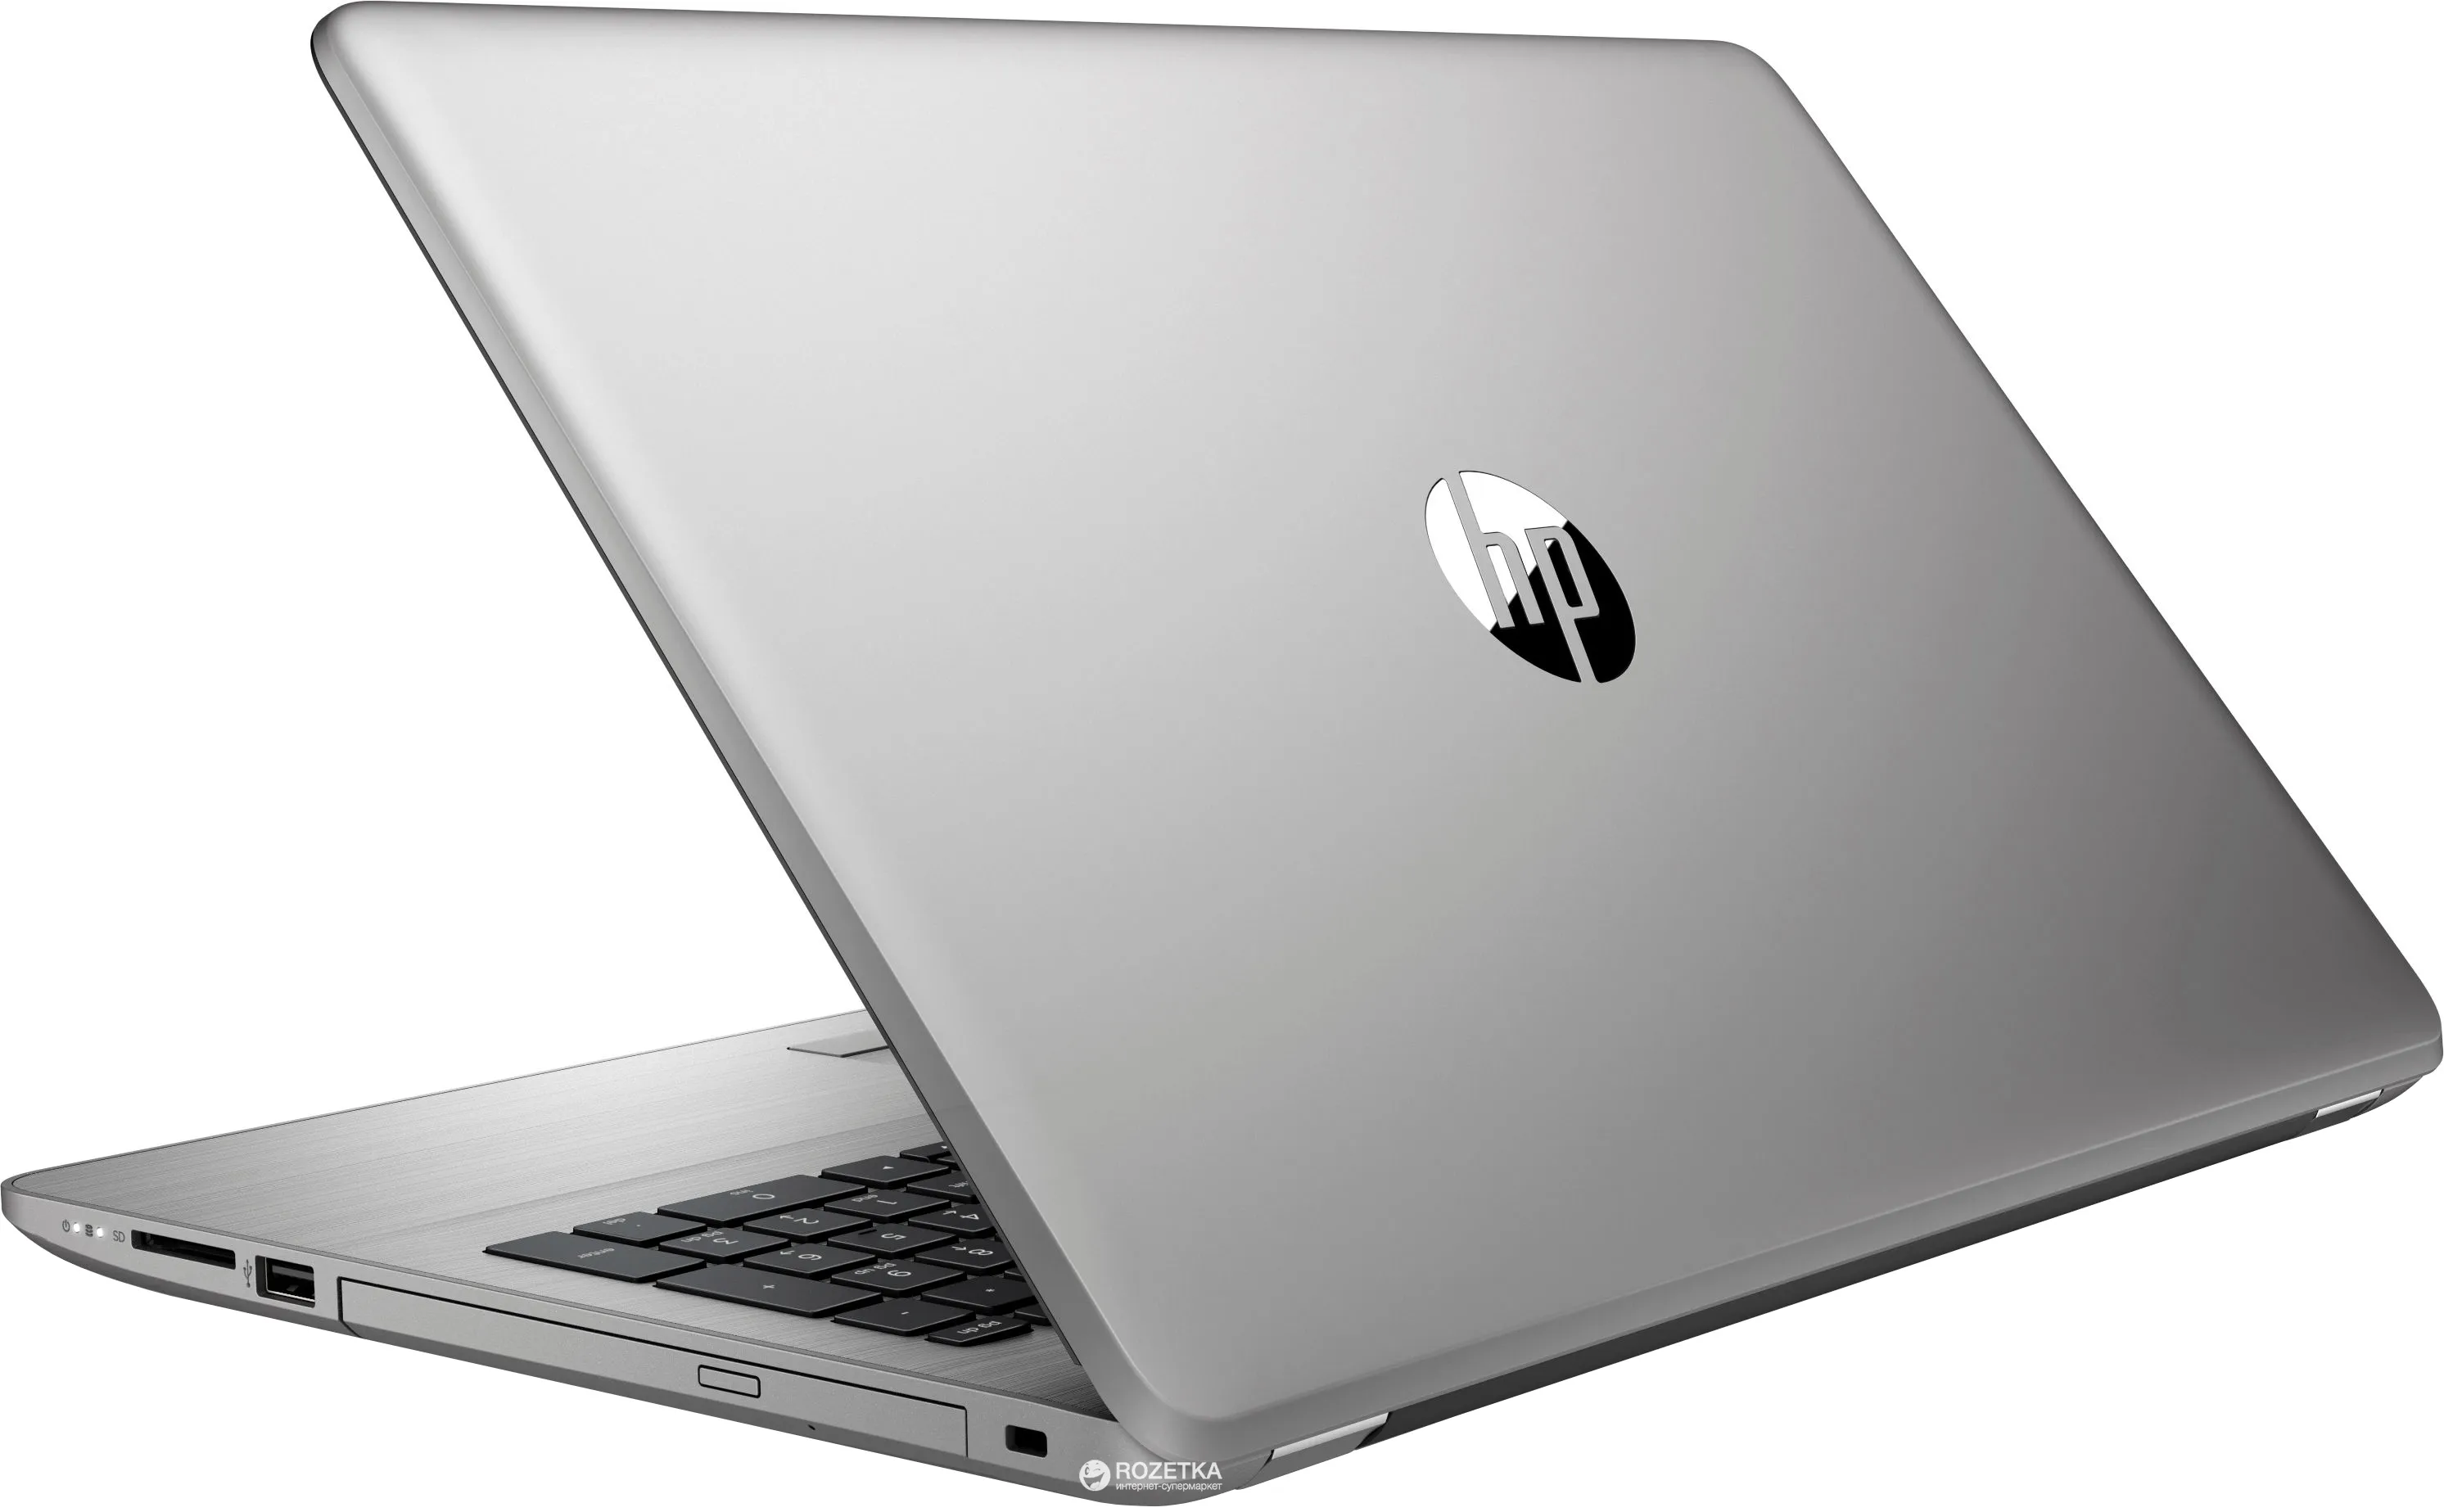 Ноутбук HP 250 G6 /Celeron 3060/4 GB DDR3/ 500GB HDD /15.6" HD LED/Intel HD Graphics 5500/ DVD / RUS#4